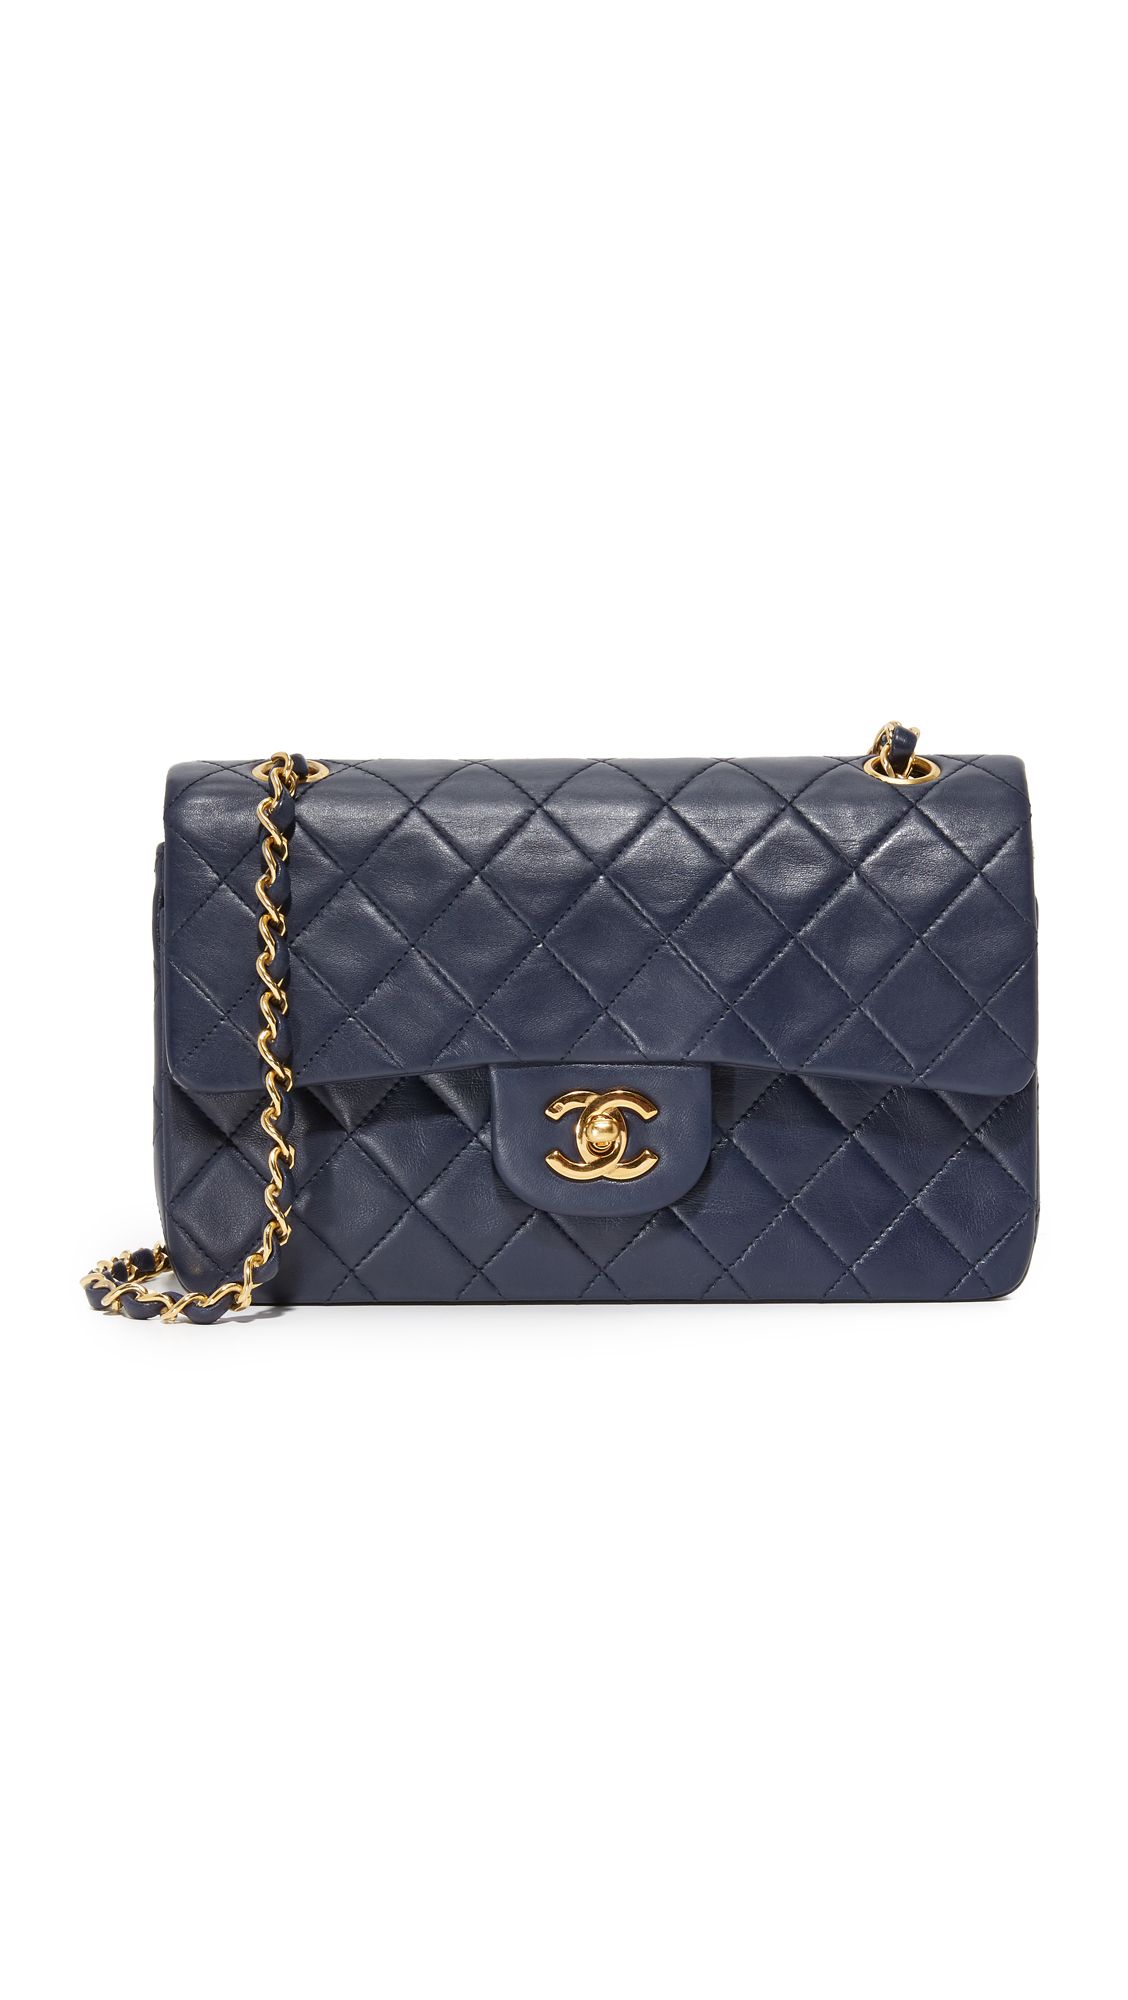 Chanel 2.55 Shoulder Bag (Previously Owned) | Shopbop